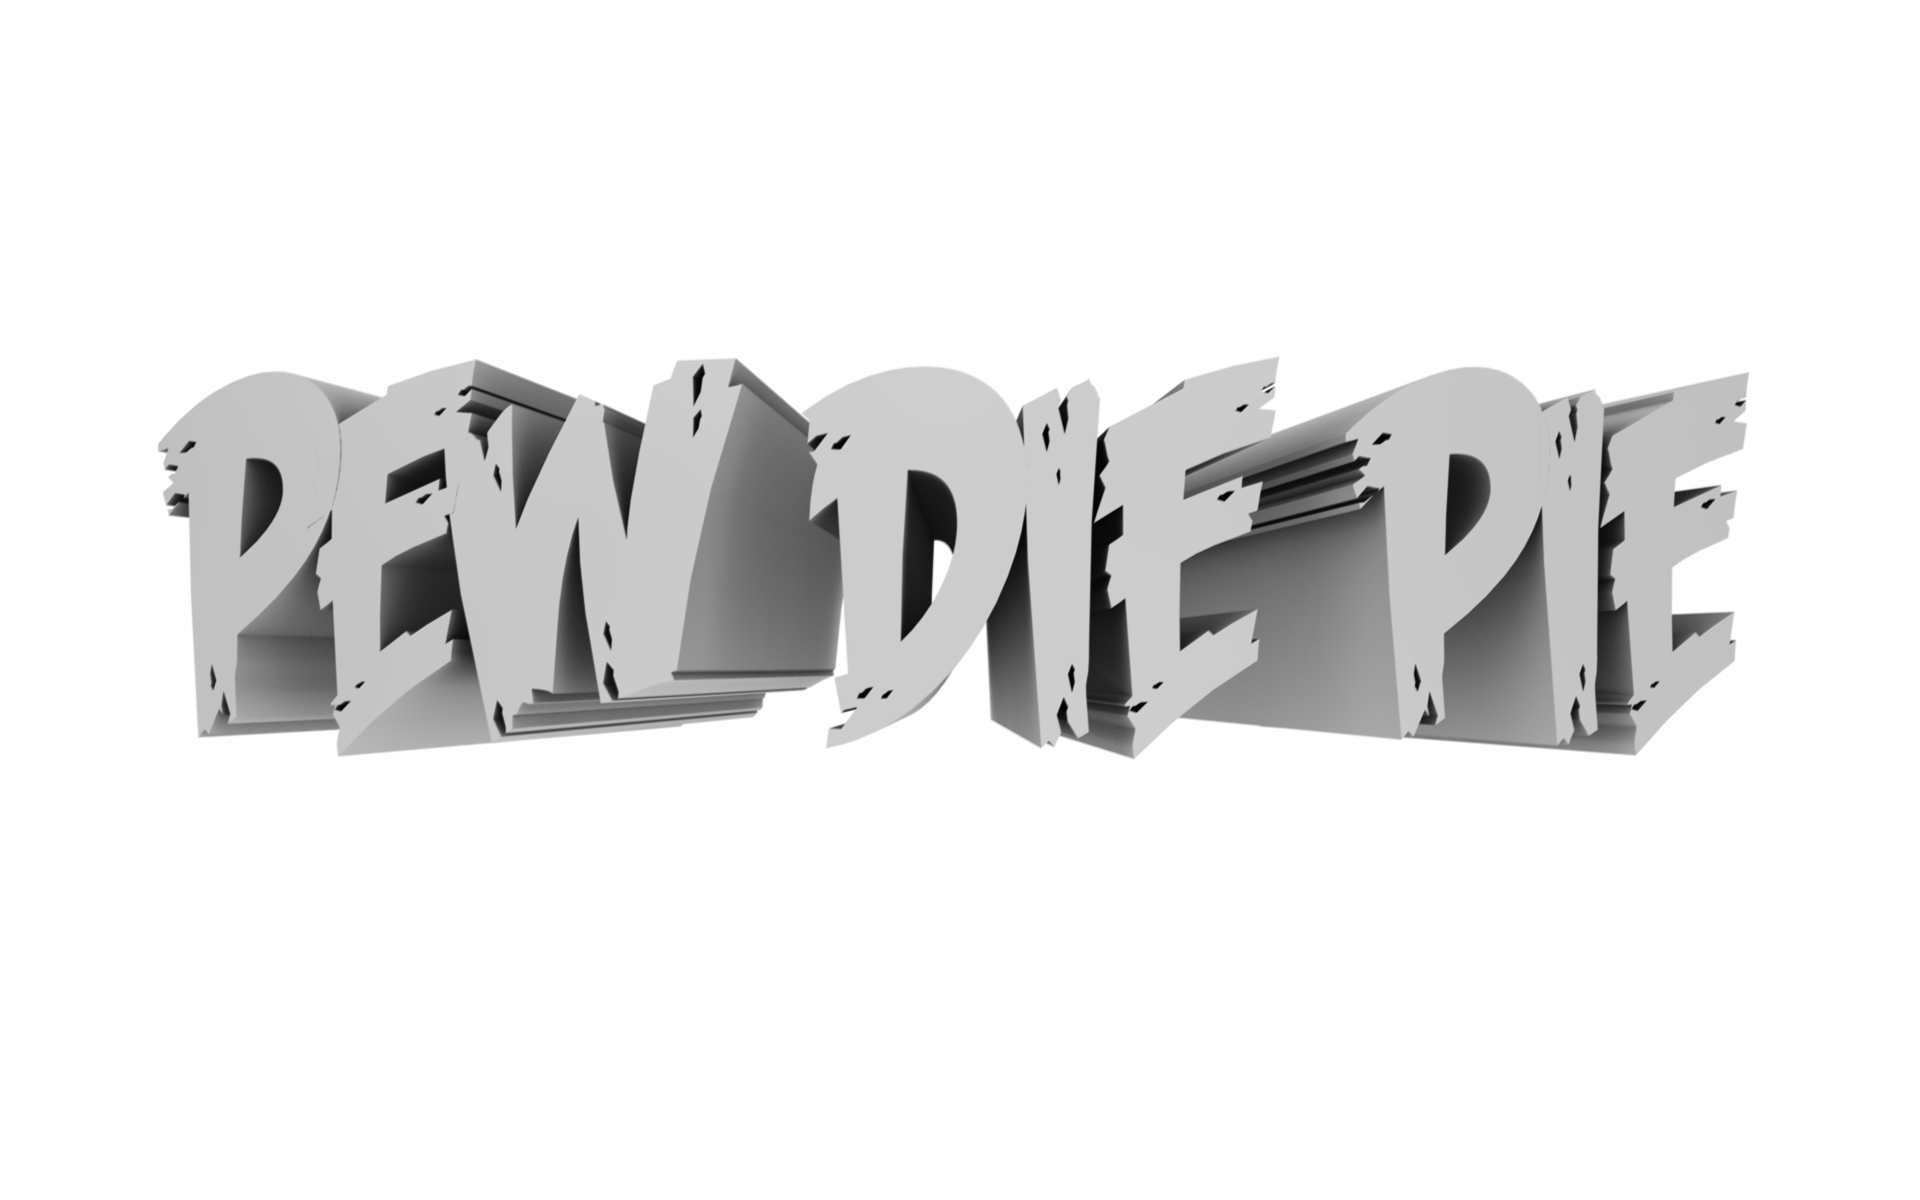 PewDiePie Black and White Logo - Pewdiepie HD wallpaper free download